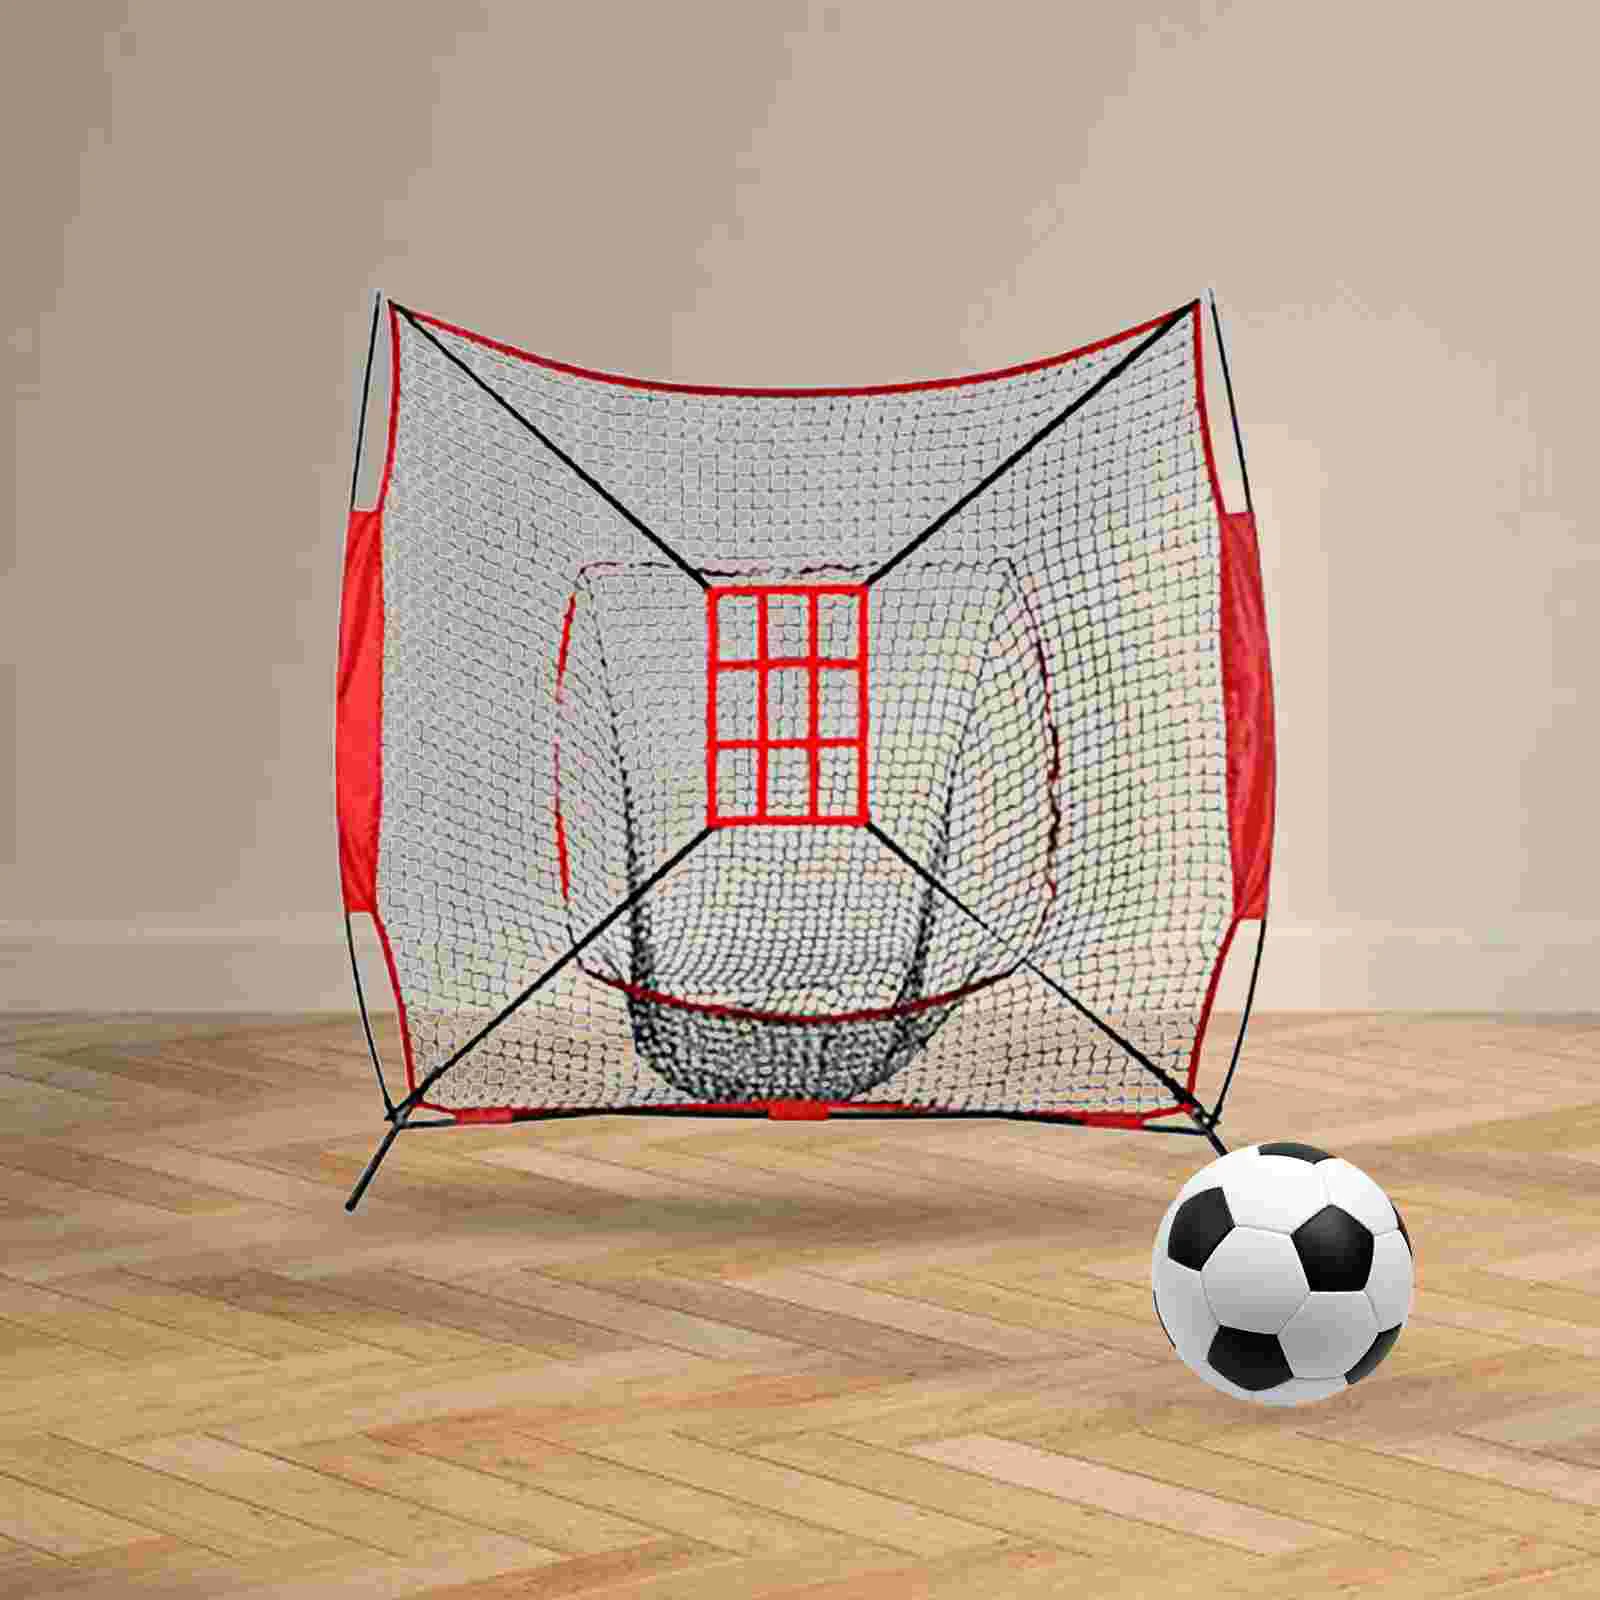 

Football Training Equipments Indoor Soccer Net Practice Party Favors Target Games Simulators Home Mini Baseballs